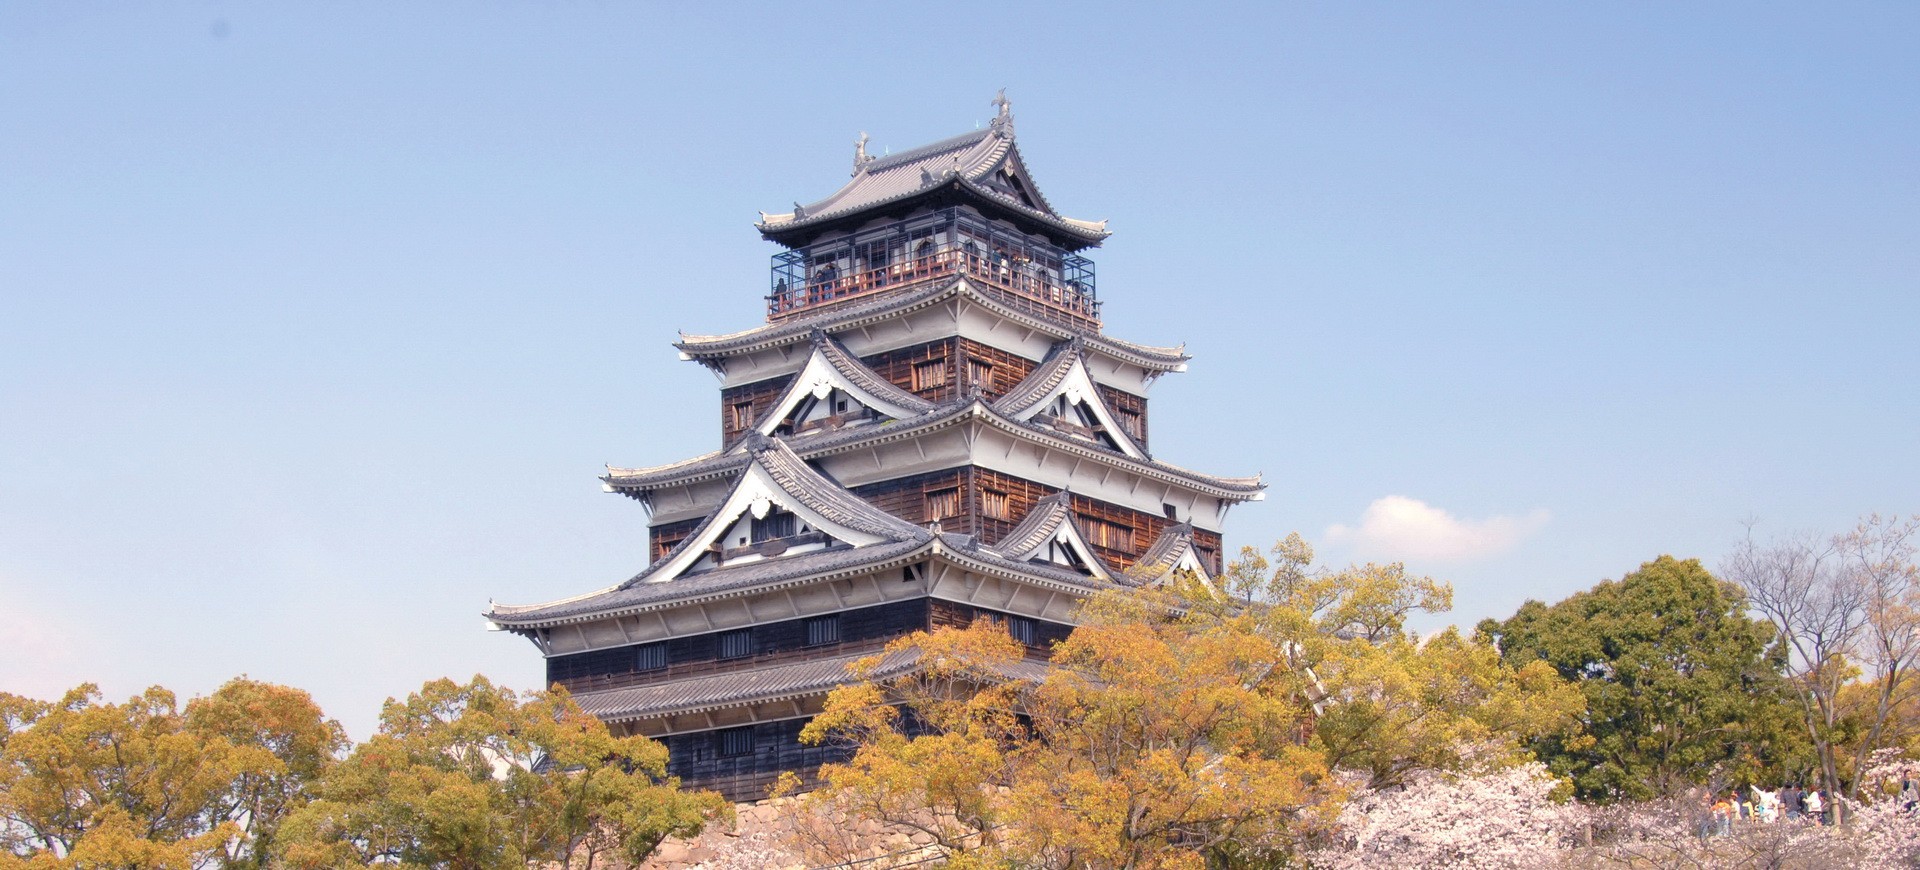 Chateau à Hiroshima